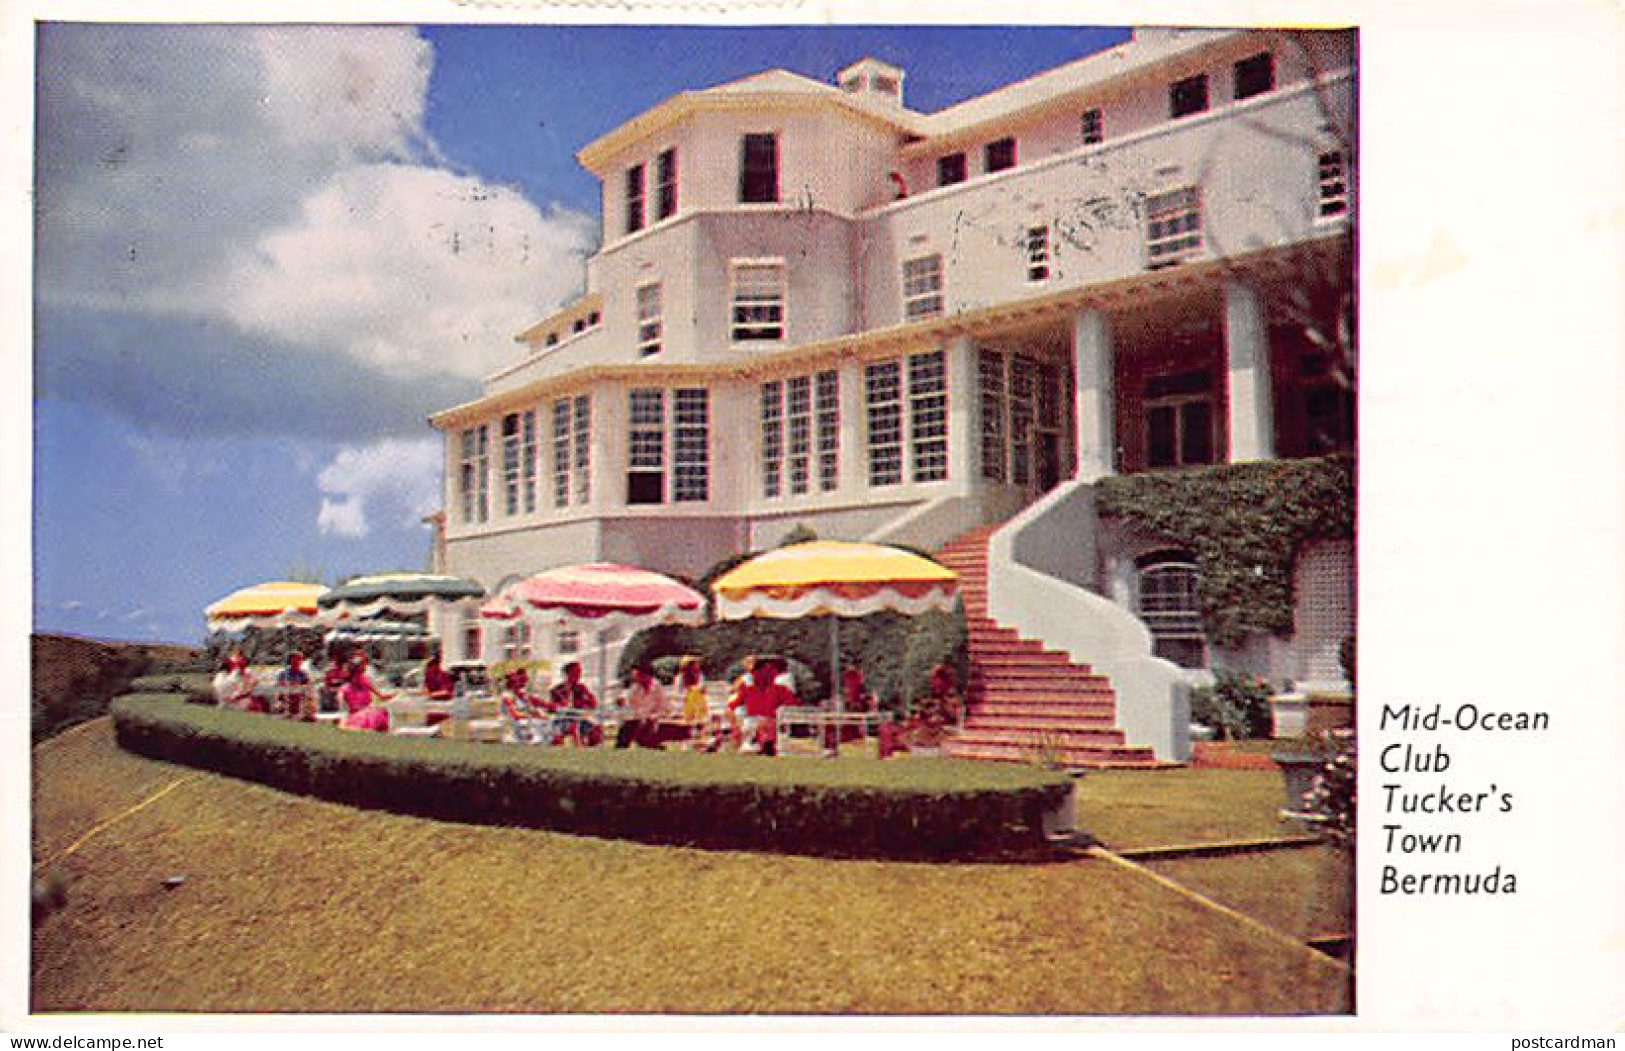 Bermuda - TUCKER'S TOWN - Terrace Of The Mid-Ocean Club - Publ. Mid-Ocean Club 2 - Bermuda